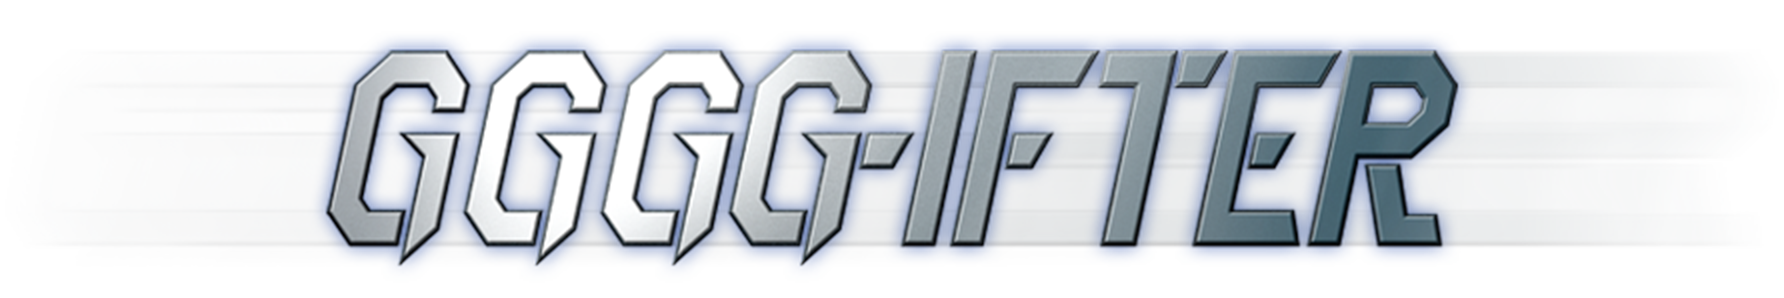 GGGG-IFTER